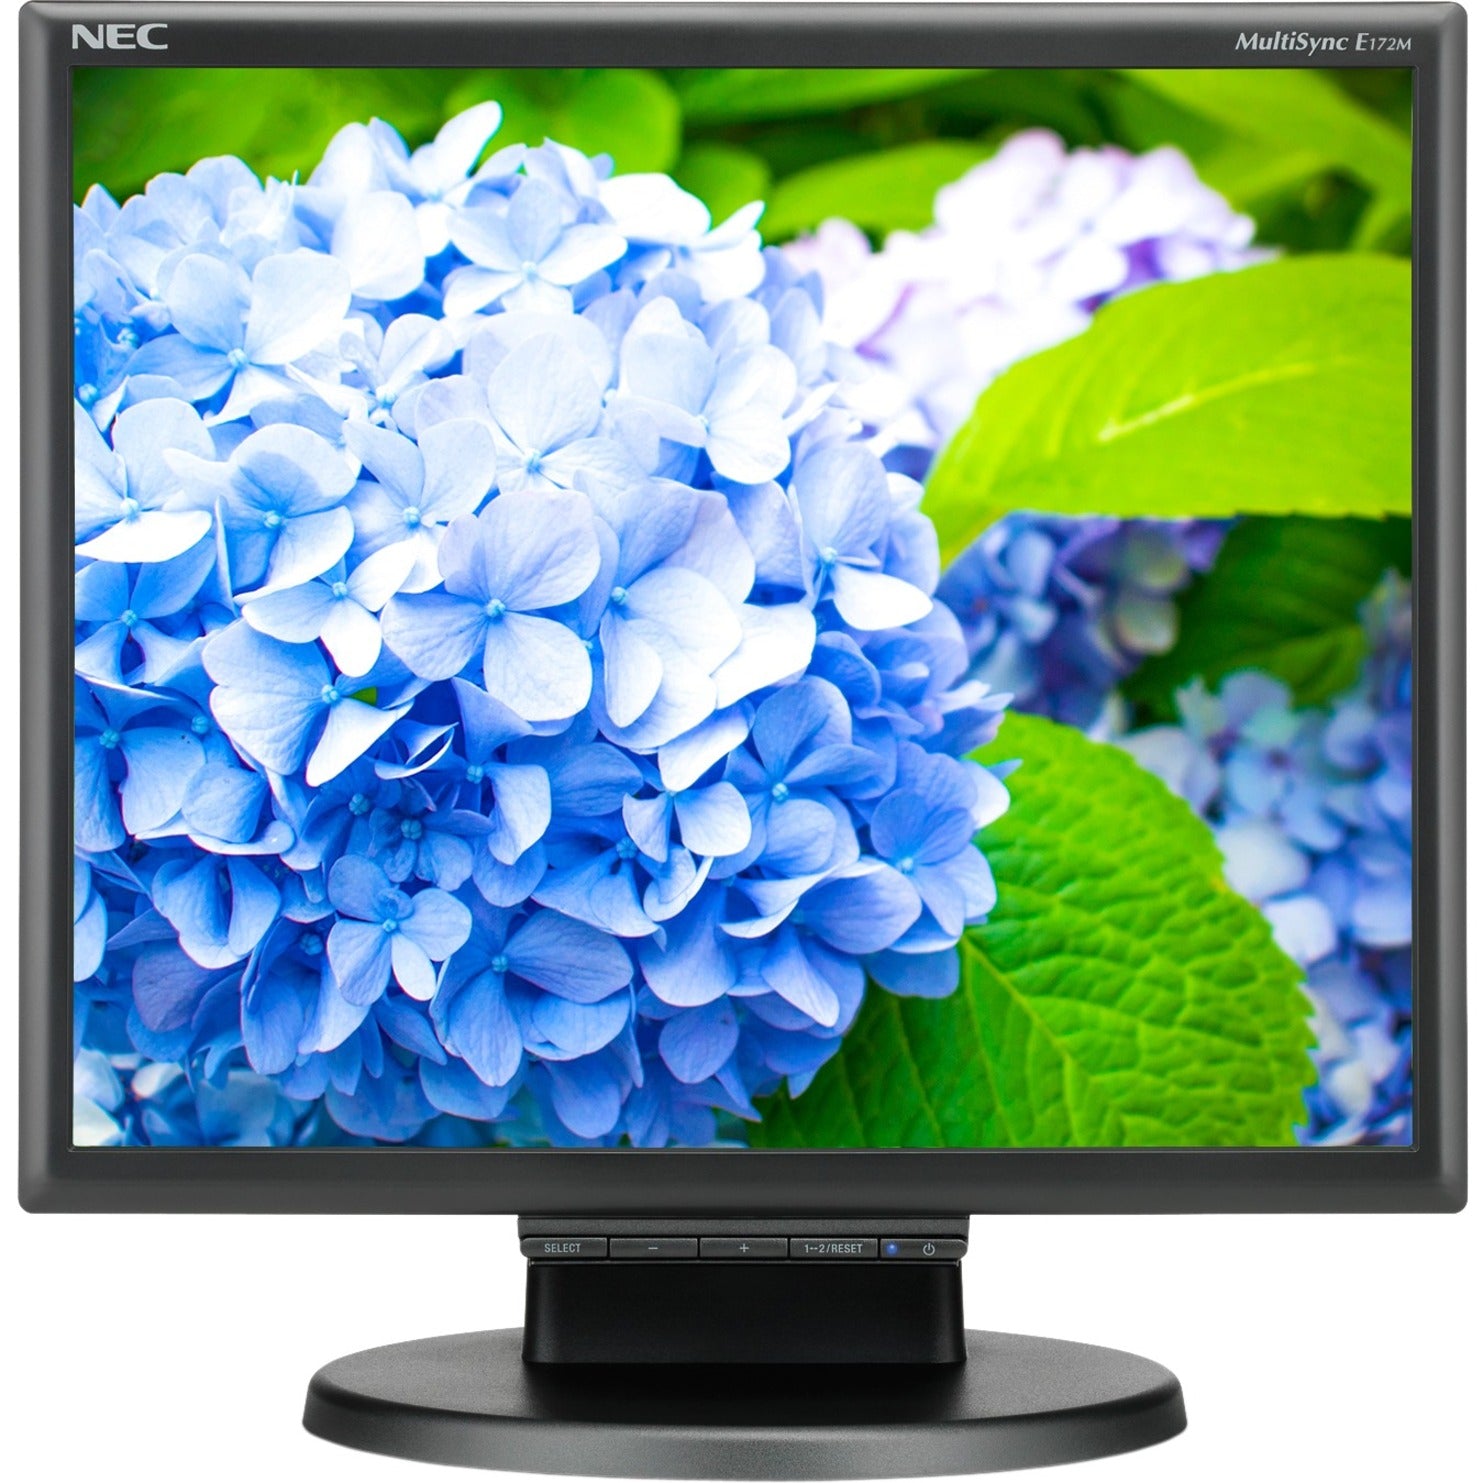 NEC Display E172M-BK 17" Desktop Monitor with LED Backlighting, 5:4 Aspect Ratio, 1280 x 1024 Resolution, Black